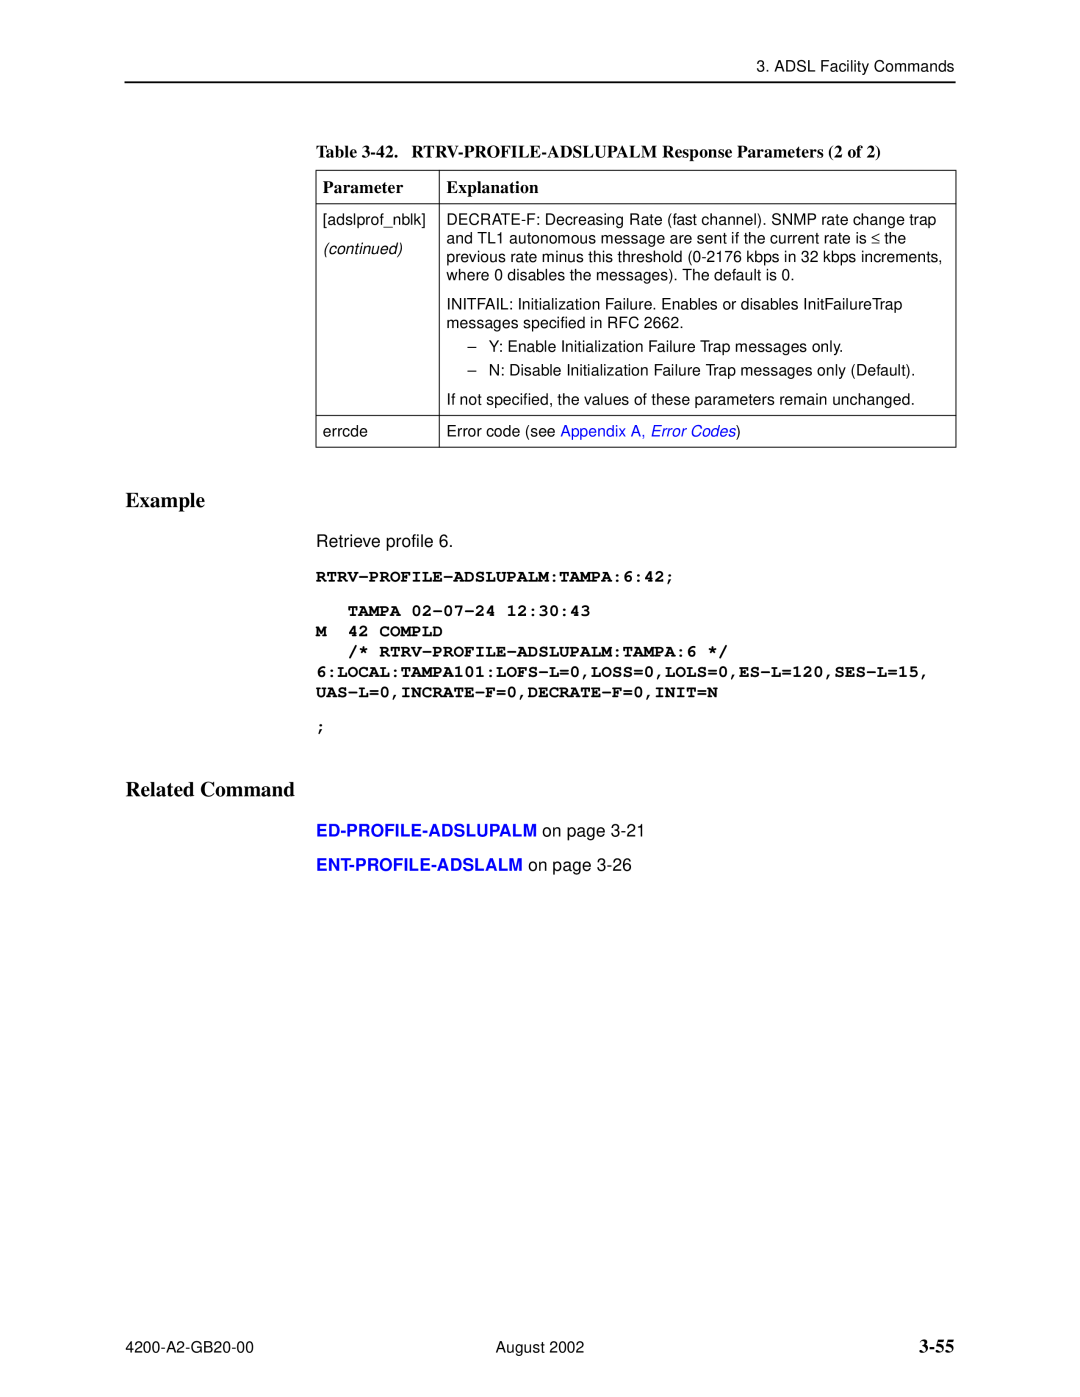 Paradyne 4200 manual 3-55, 42. RTRV-PROFILE-ADSLUPALM Response Parameters 2 of, RTRV-PROFILE-ADSLUPALMTAMPA6, Example 